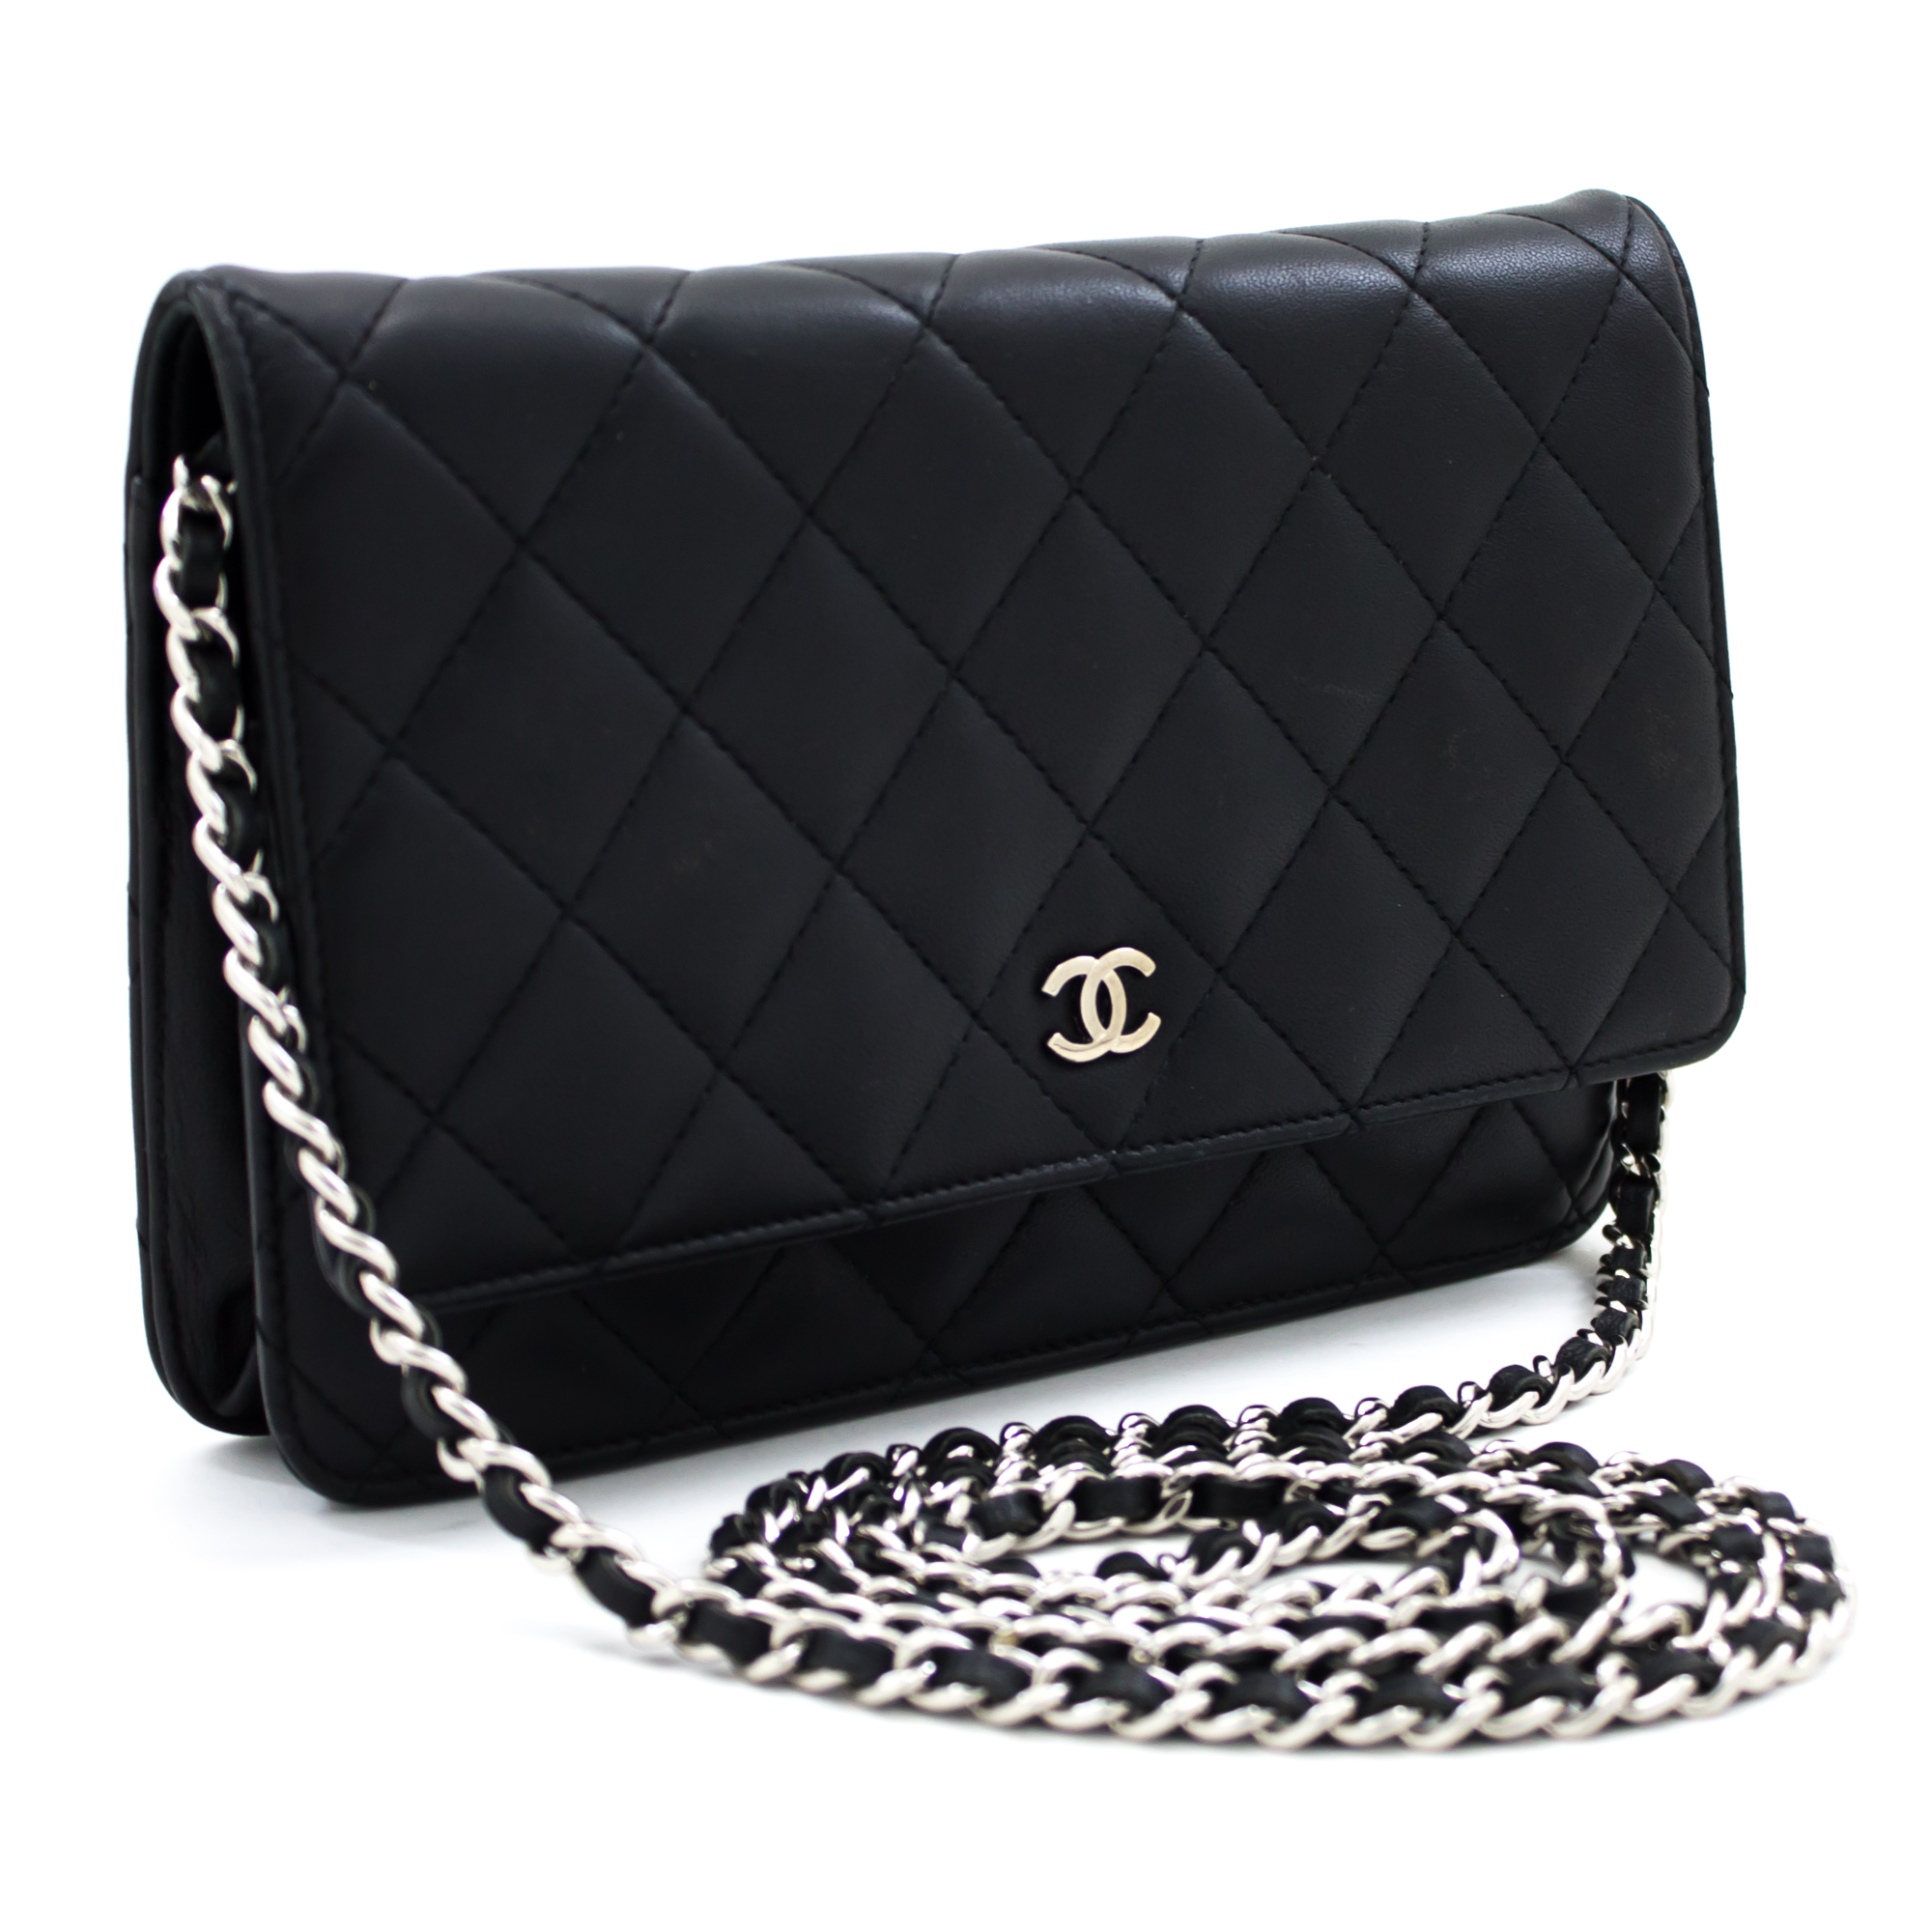 CHANEL Black Wallet On Chain WOC Shoulder Bag Crossbody Clutch t05 | eBay